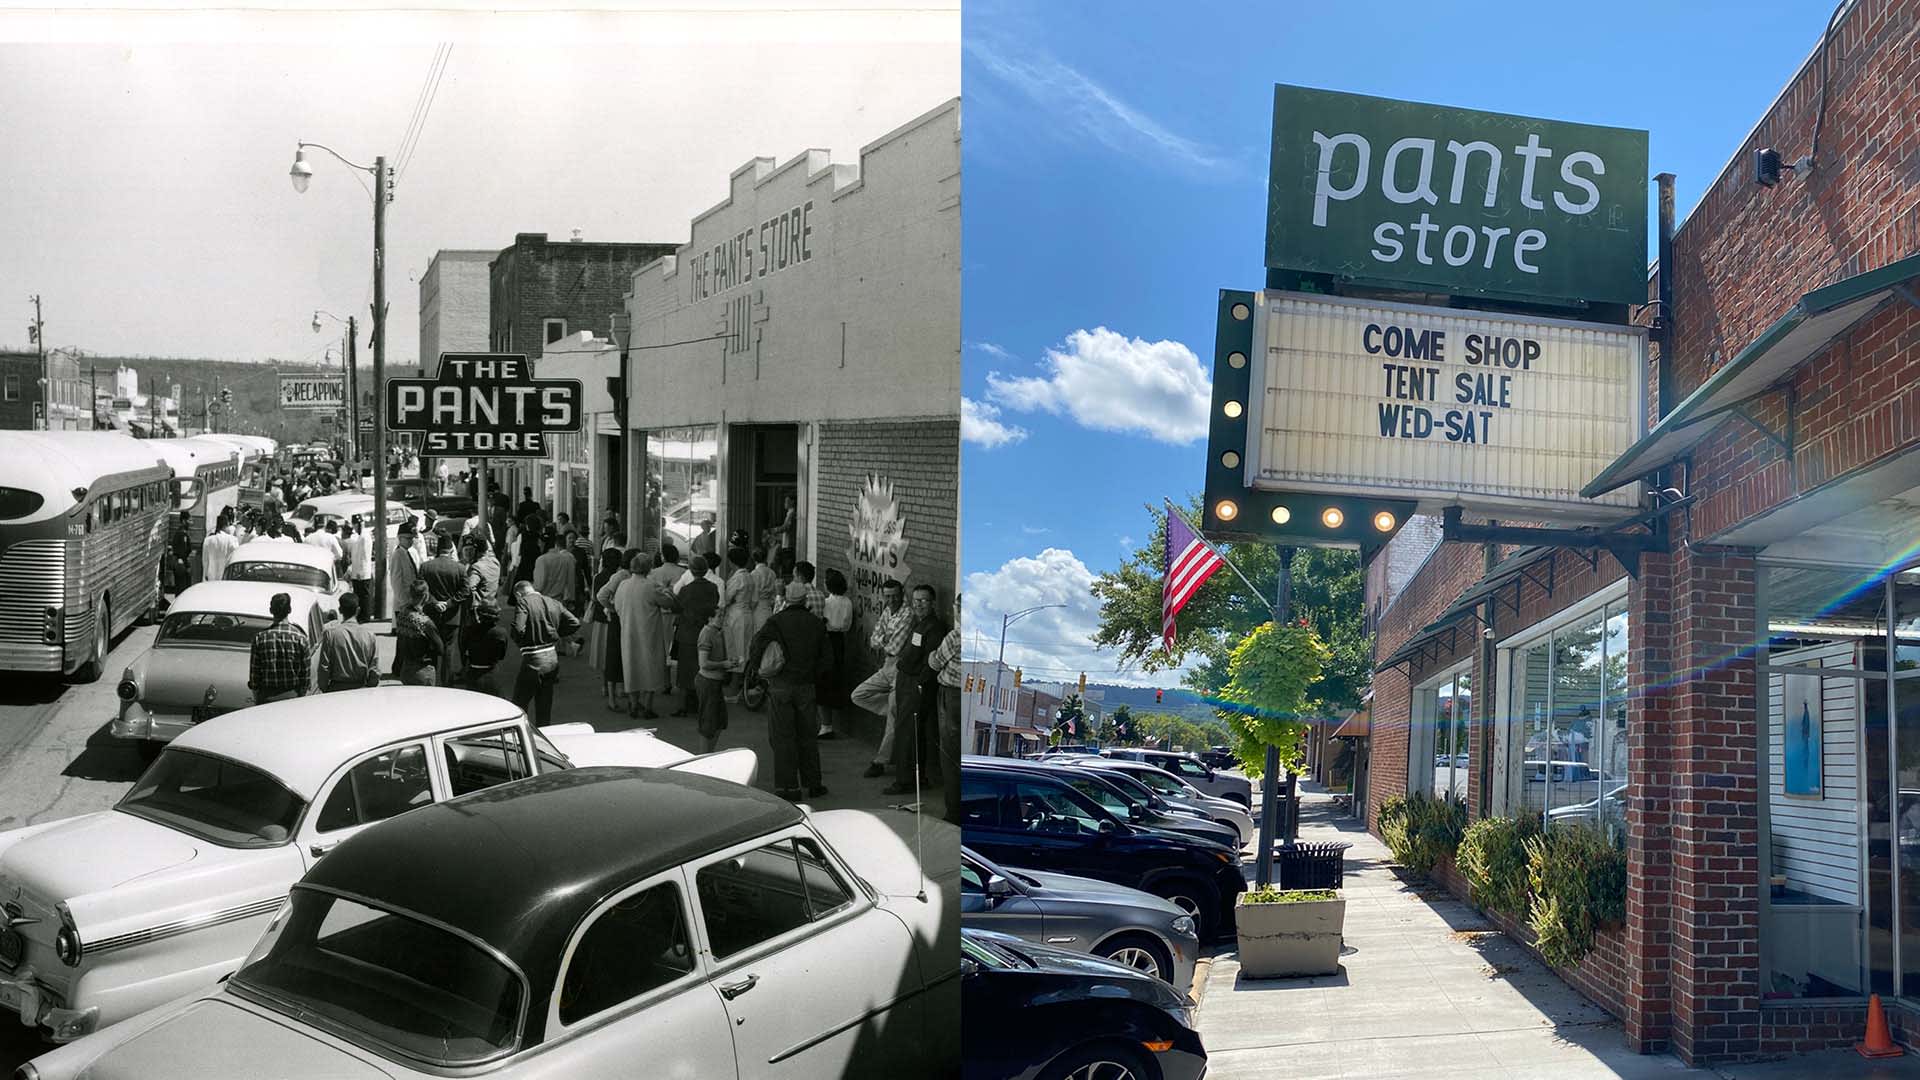 The original Pants Store in Leeds, Alabama. 